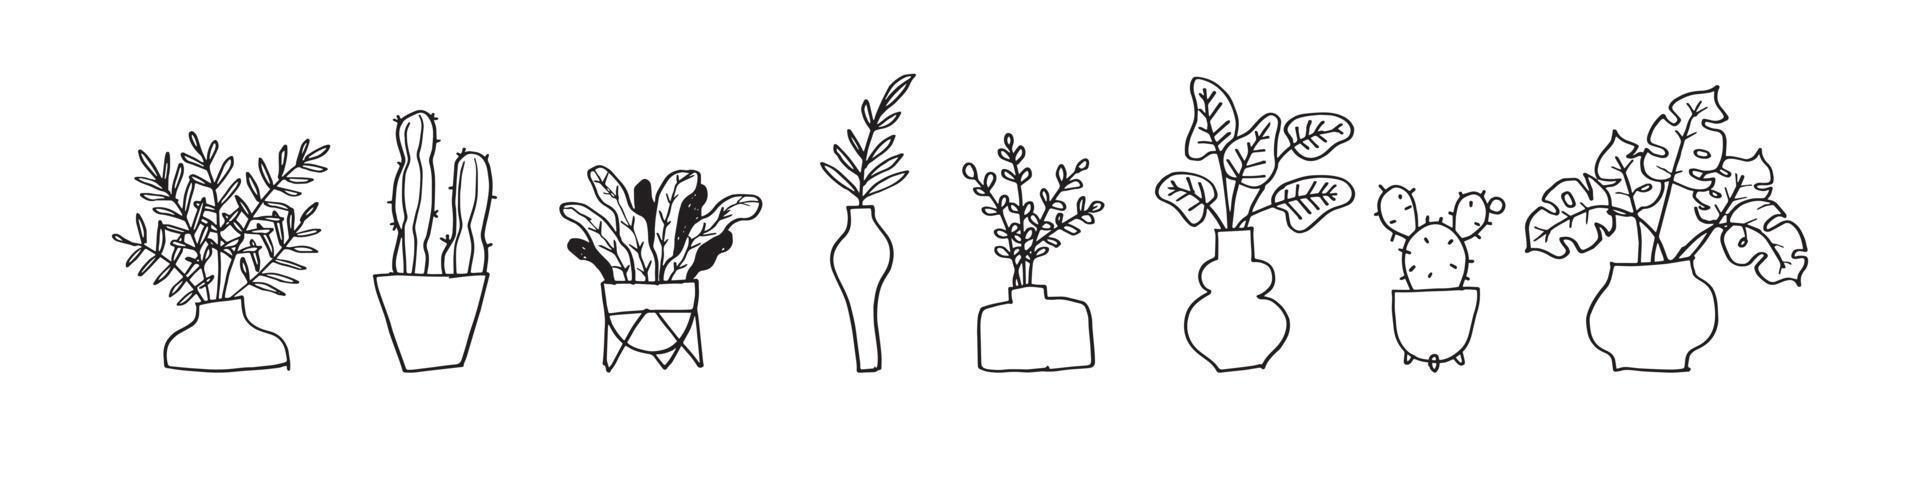 Uncolored flowerpot illustration vector